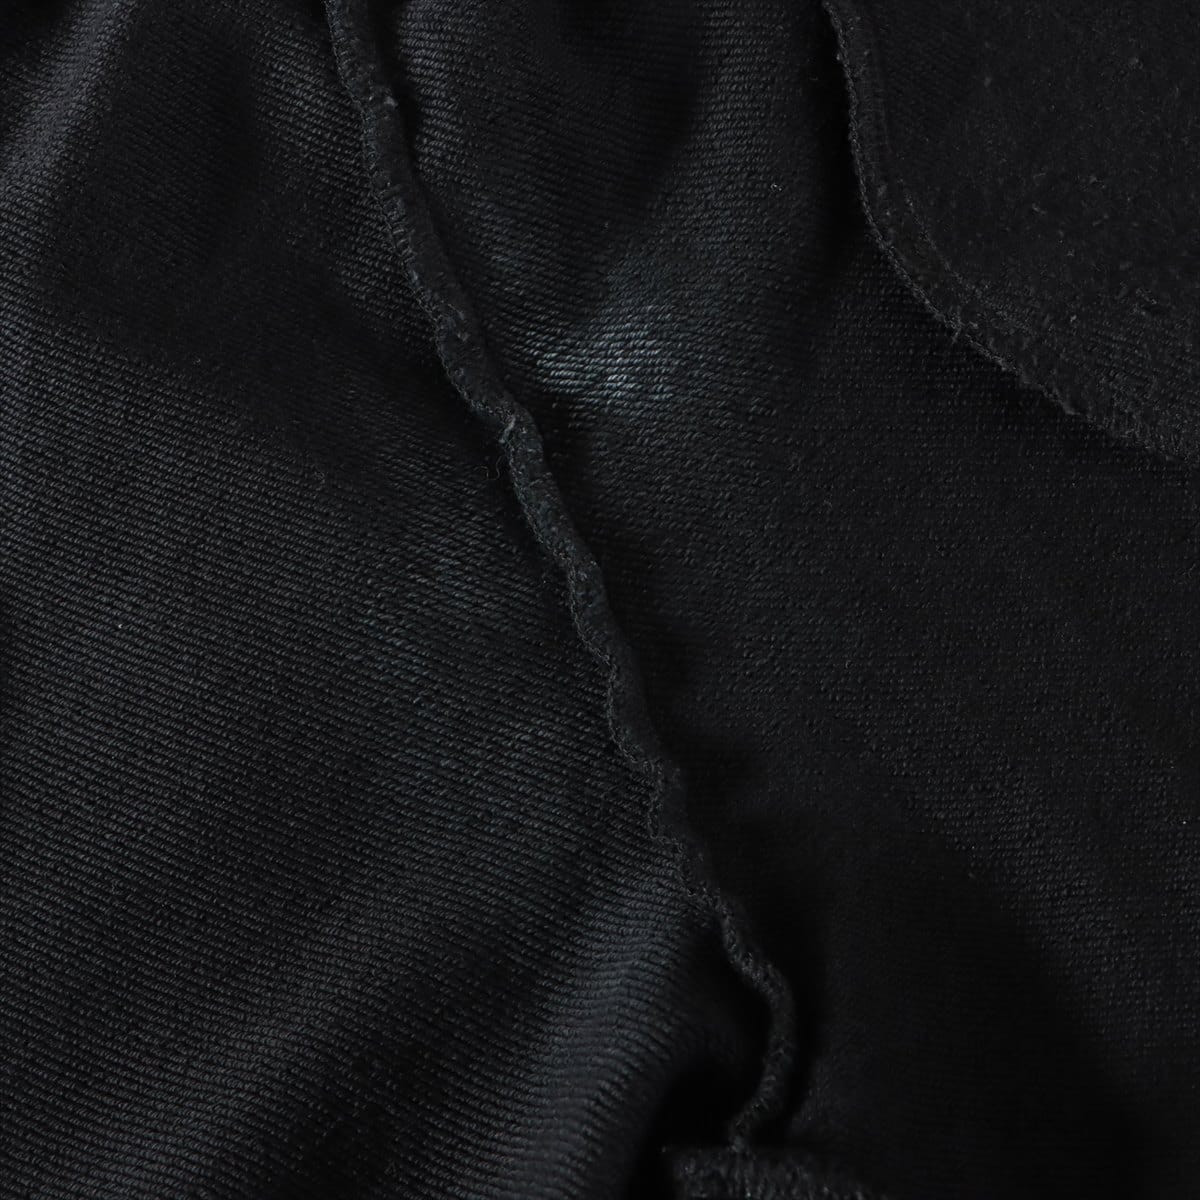 Fendi Unknown material Sweatpants Unknown size Men's Black No sign tag